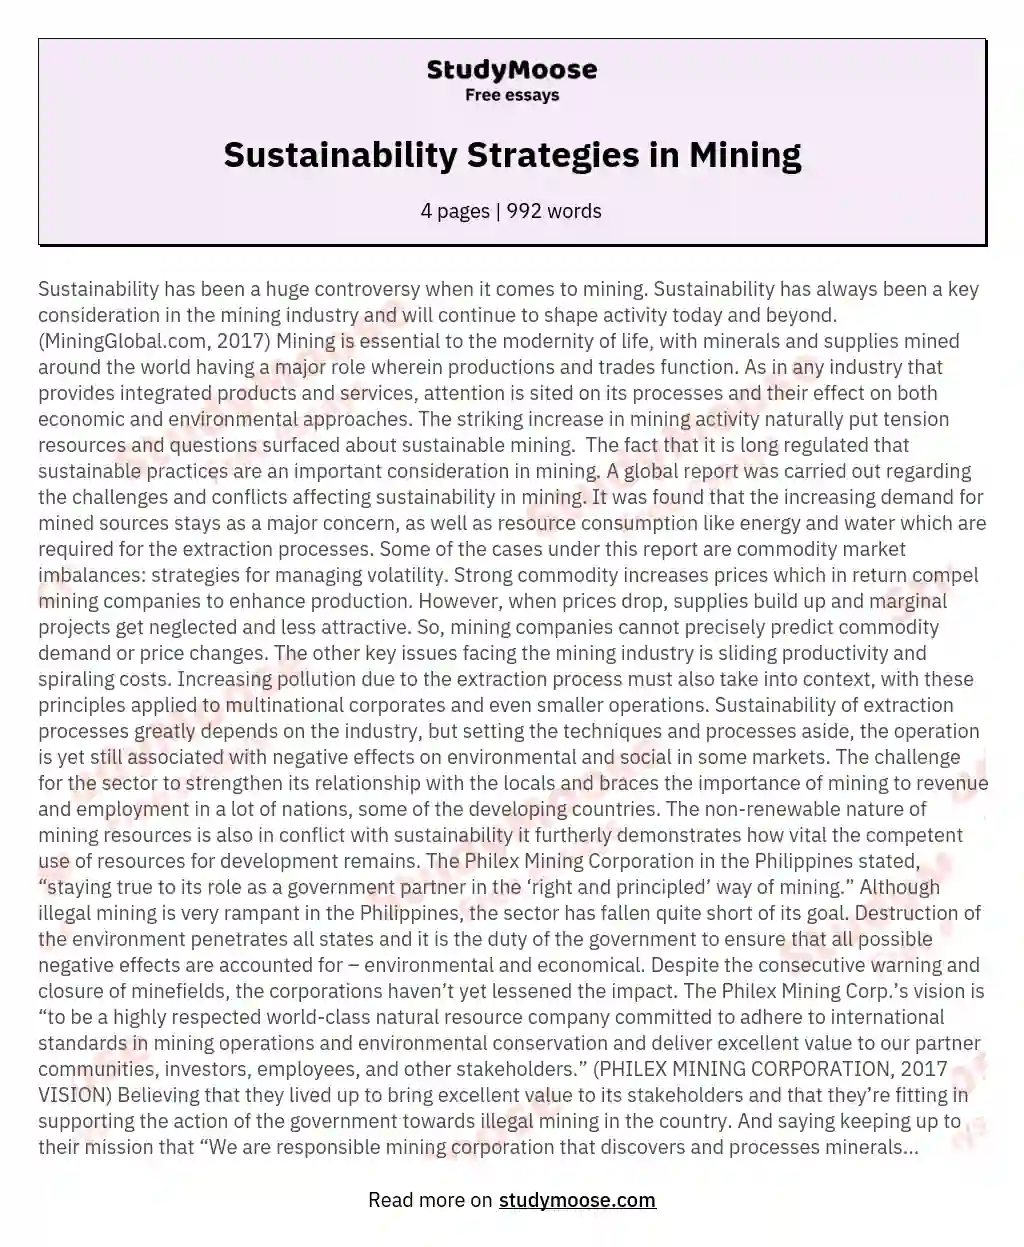 Sustainability Strategies in Mining